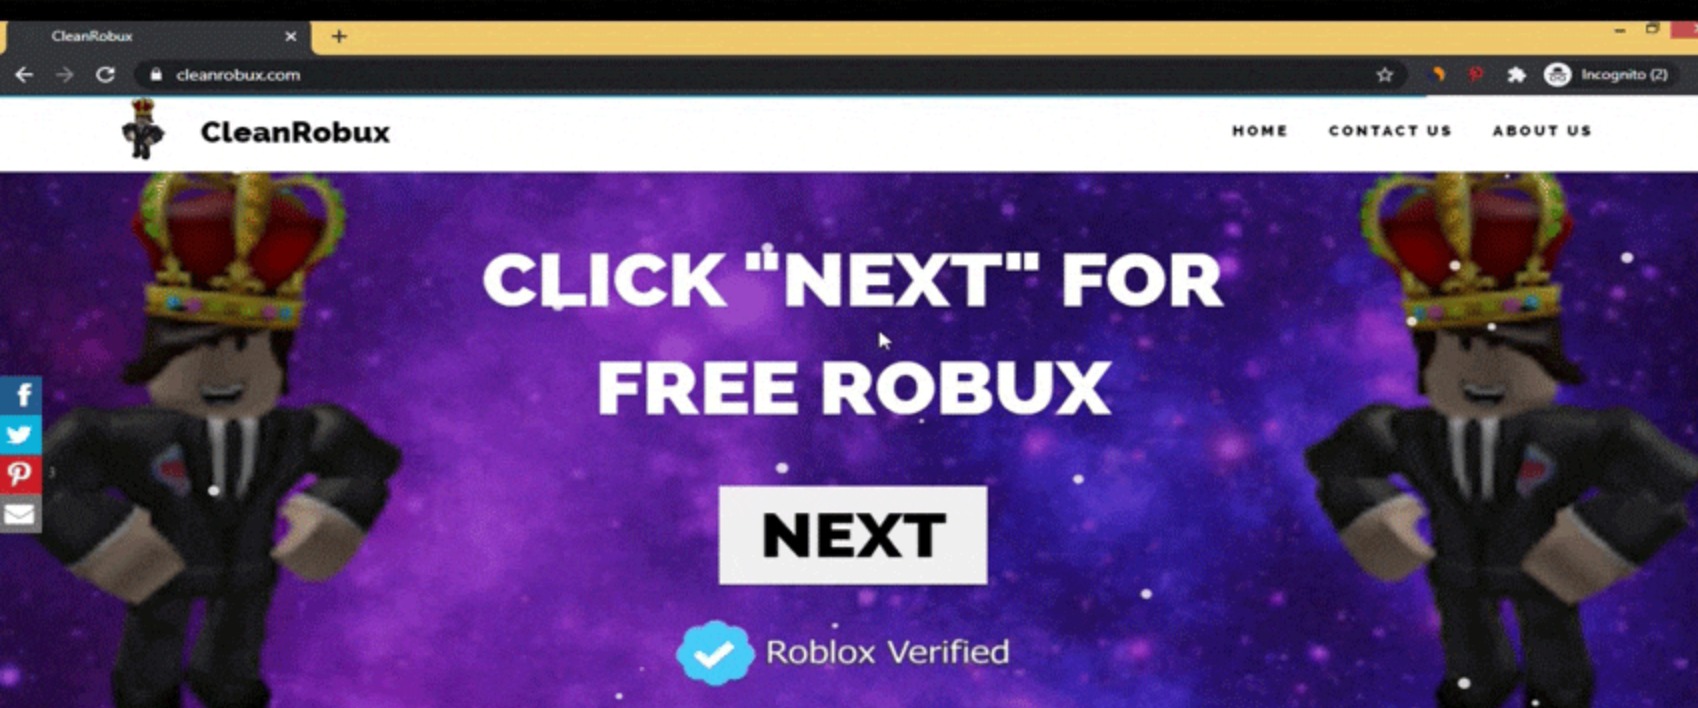 Cleanrobux Com Free Robux Is The Website Legit Ridzeal - robux legit